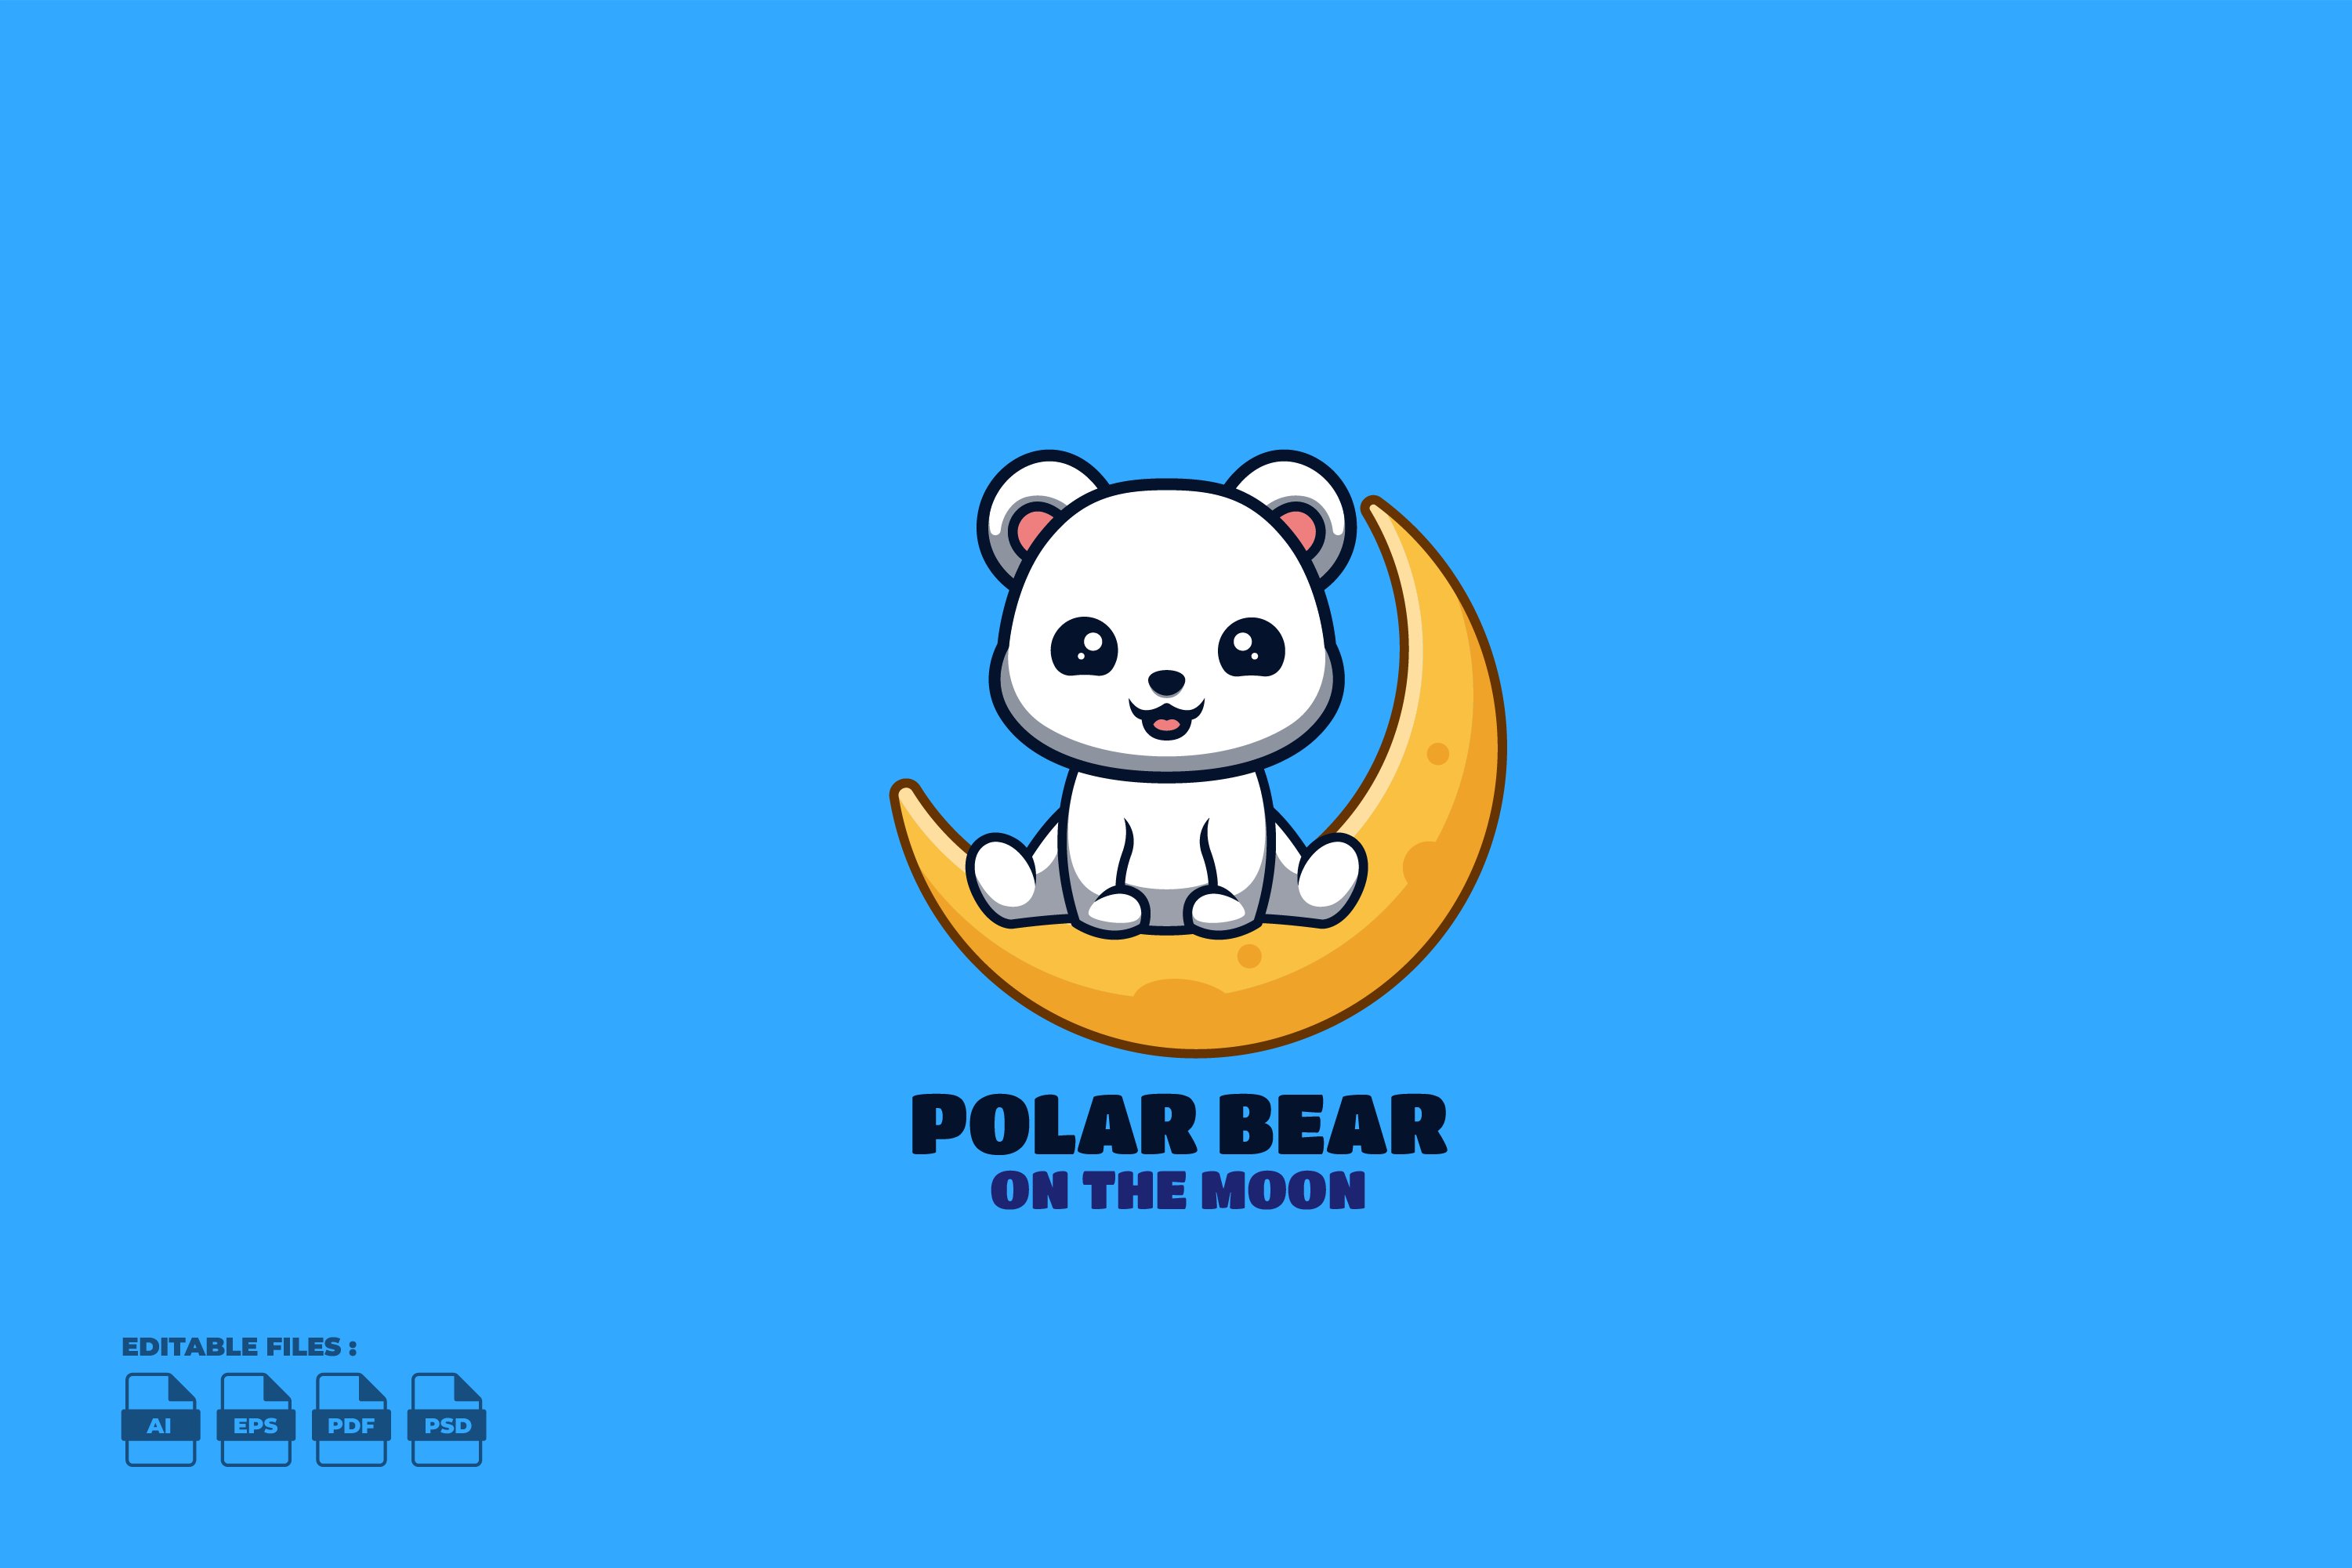 On The Moon Polar Bear Cute Mascot L cover image.